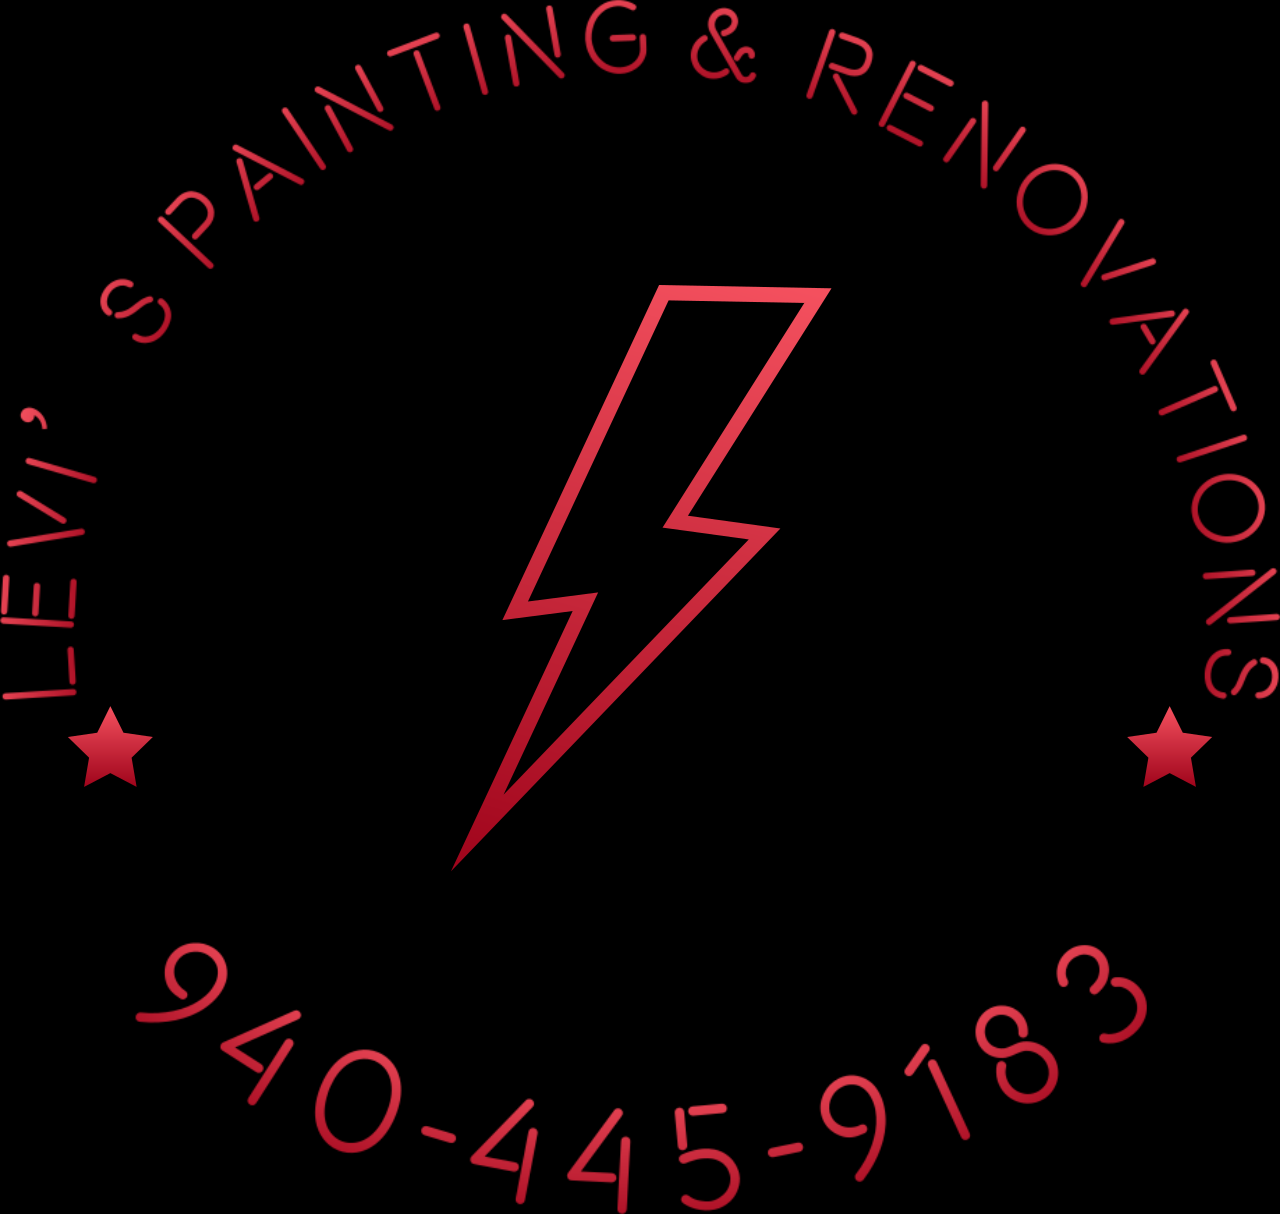 Levi’s painting & renovations's logo